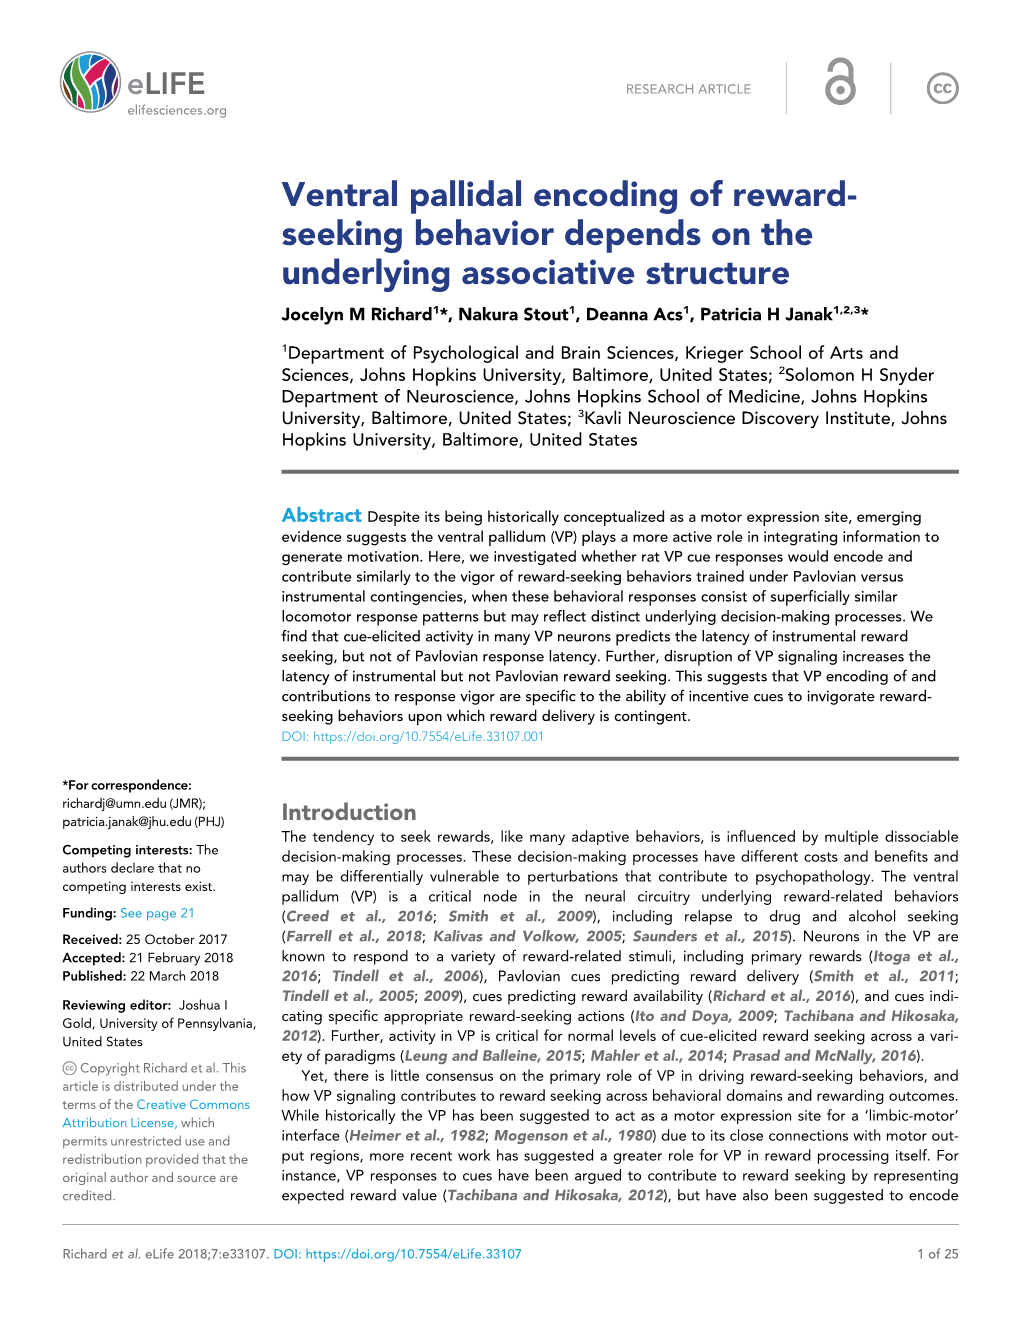 Ventral Pallidal Encoding of Reward- Seeking Behavior Depends on The